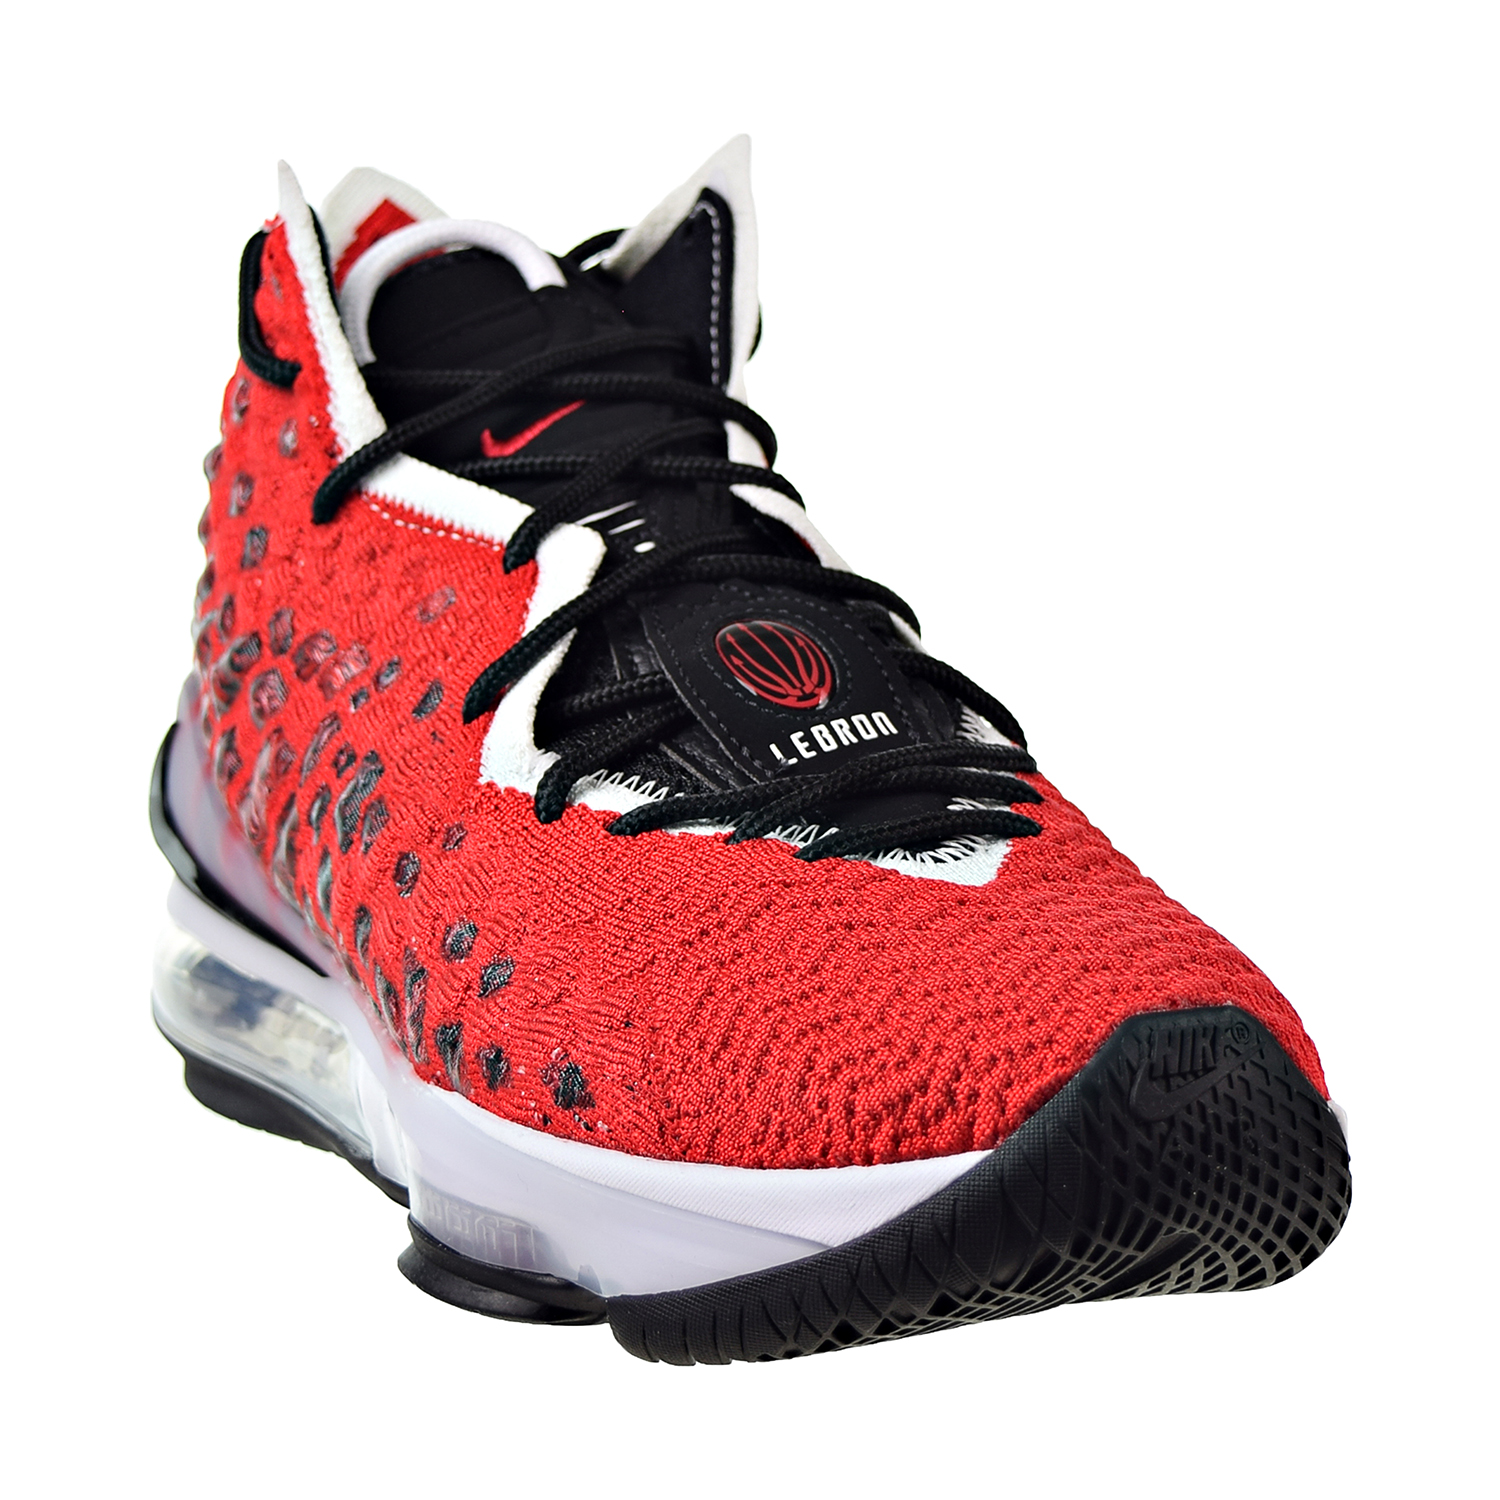 Nike LeBron 17 "Uptempo" Men's Basketball Shoes University Red-Black bq3177-601 - image 2 of 6